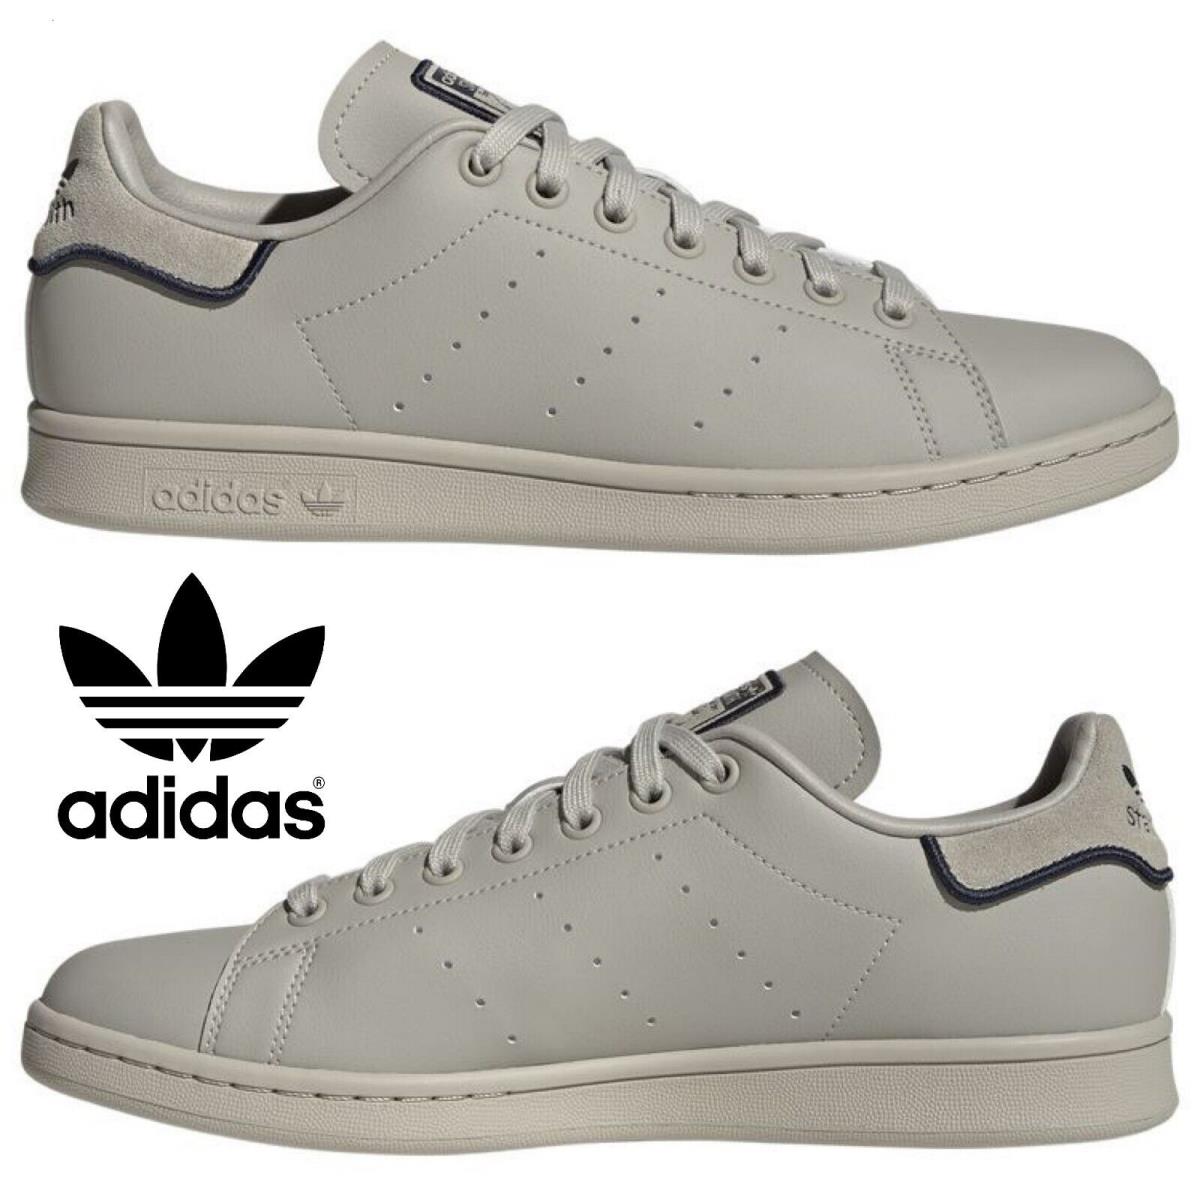 Adidas Originals Stan Smith Men`s Sneakers Comfort Sport Casual Shoes Gray